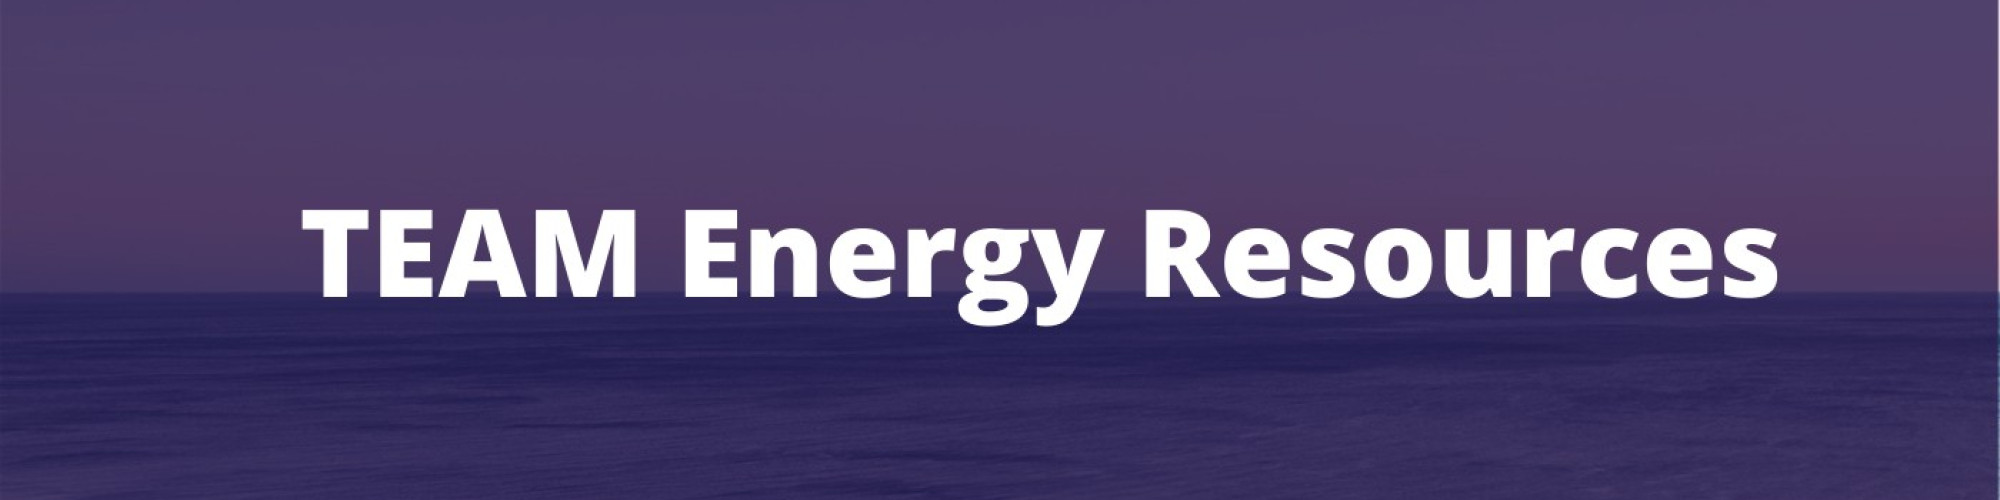 Team Energy Resources